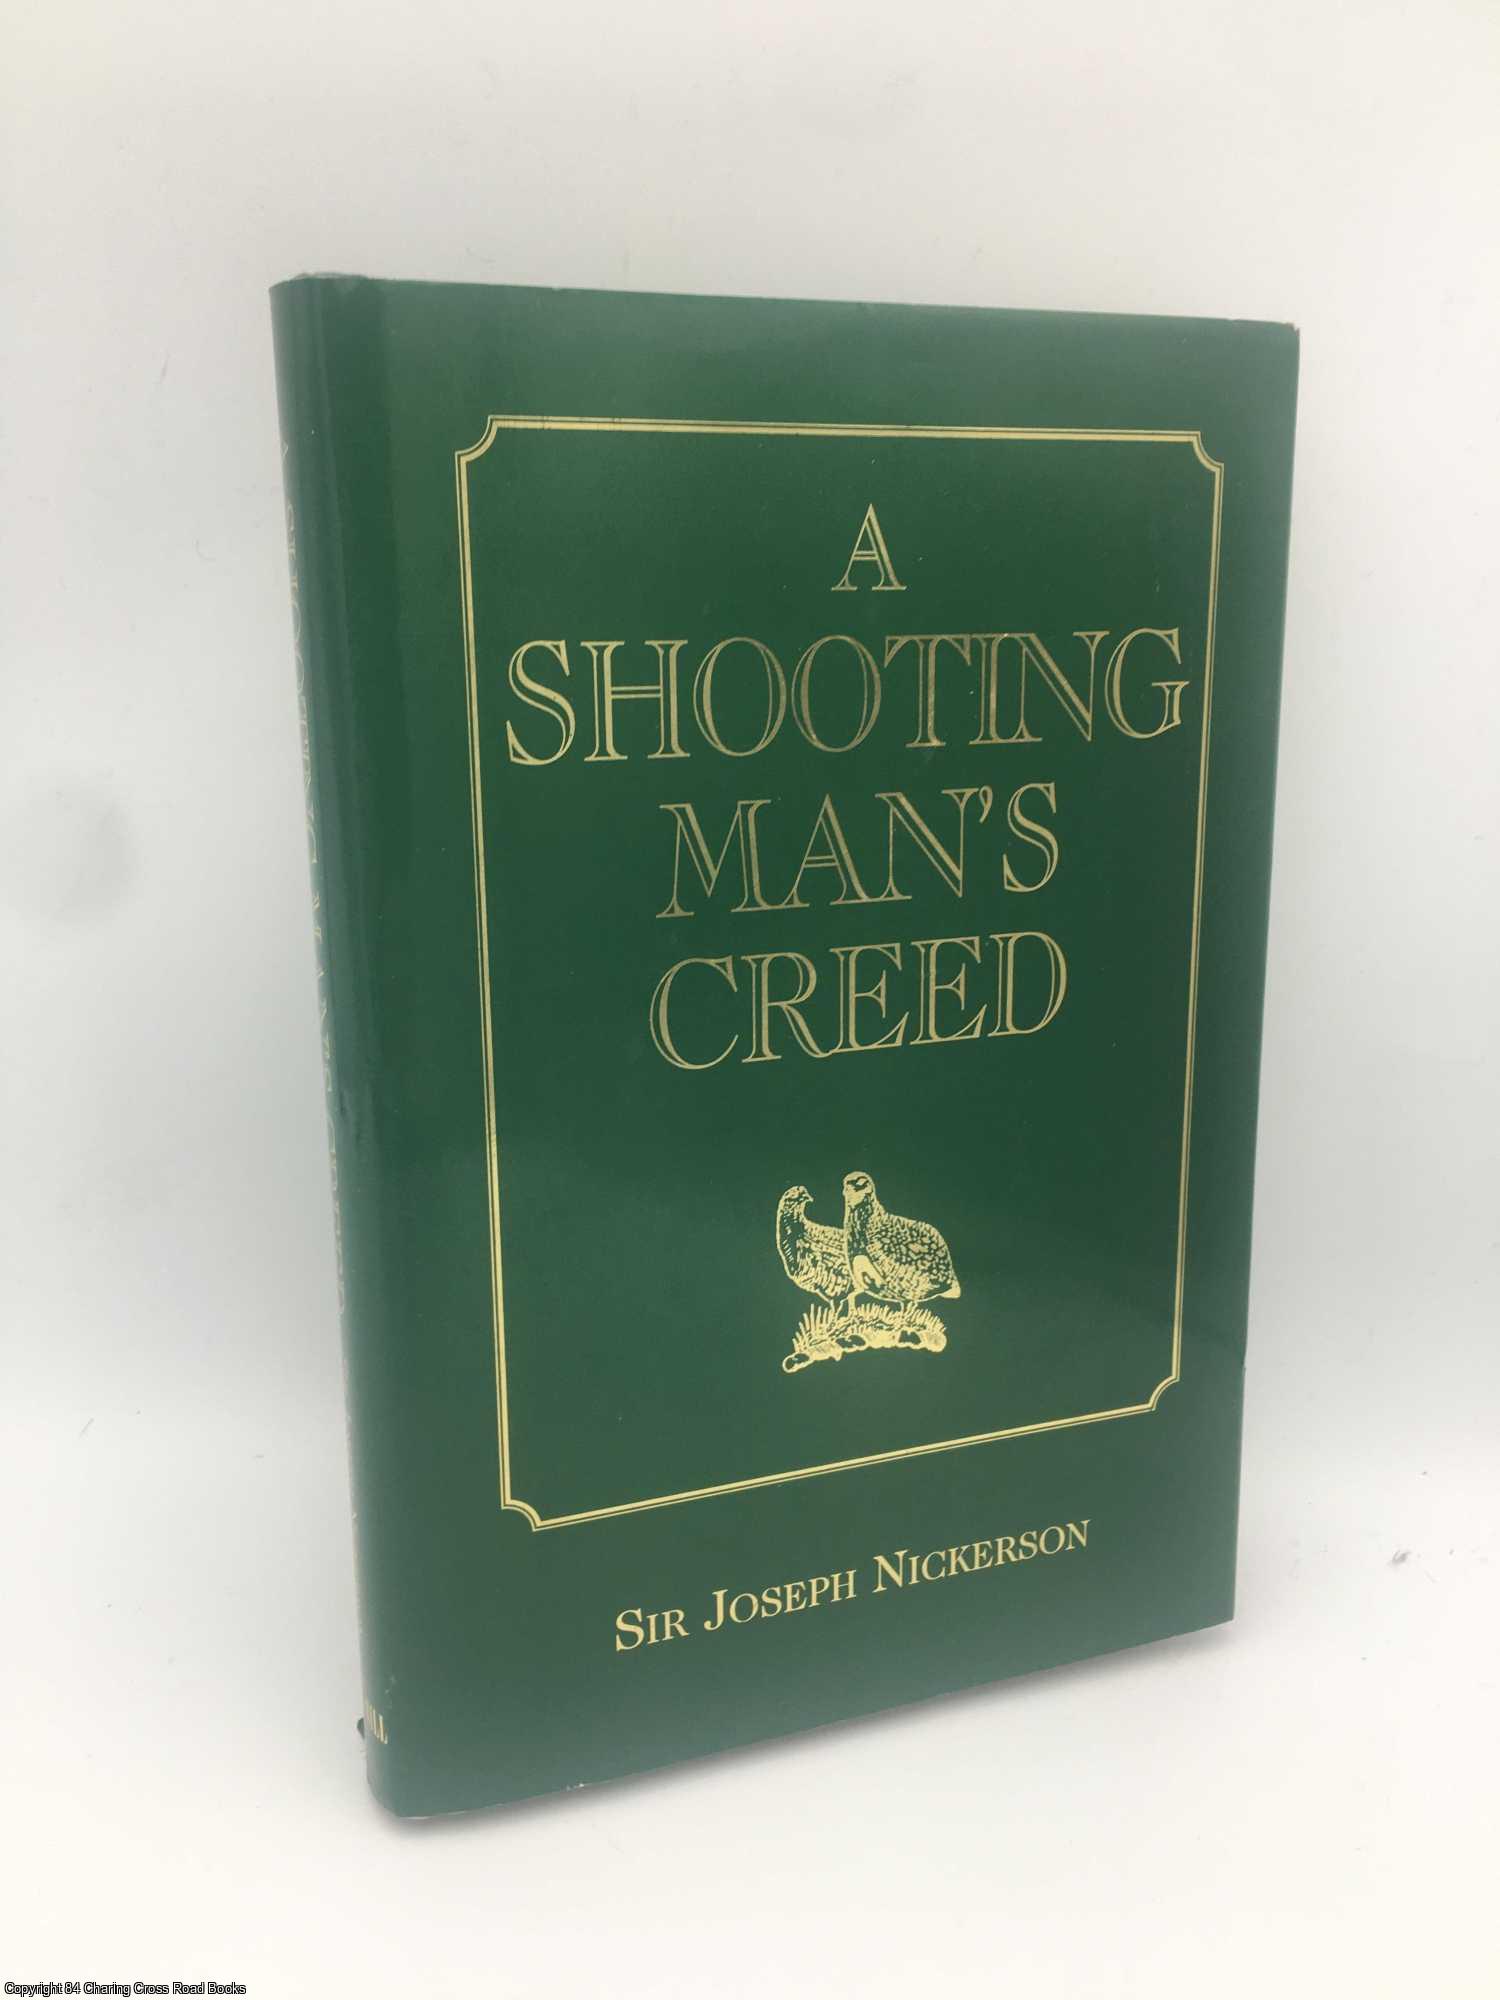 Nickerson, Sir Joseph - A Shooting Man's Creed